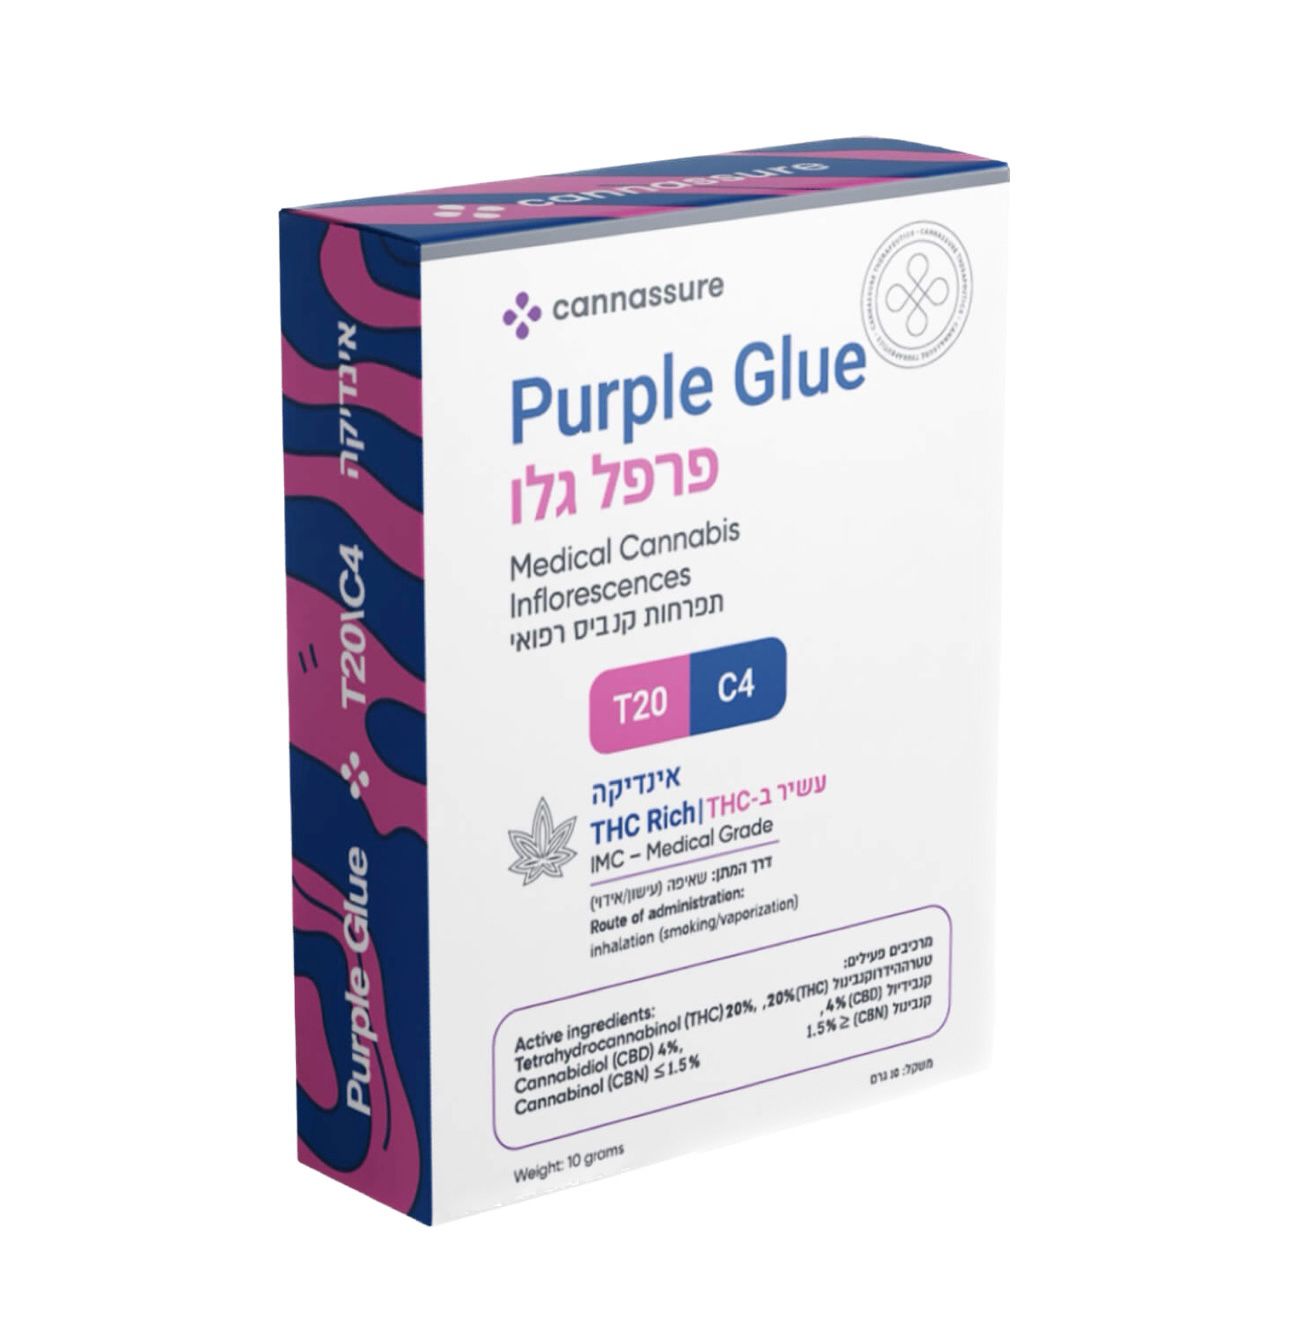 Select Purple glue Inflorescences T20/C4 Indica